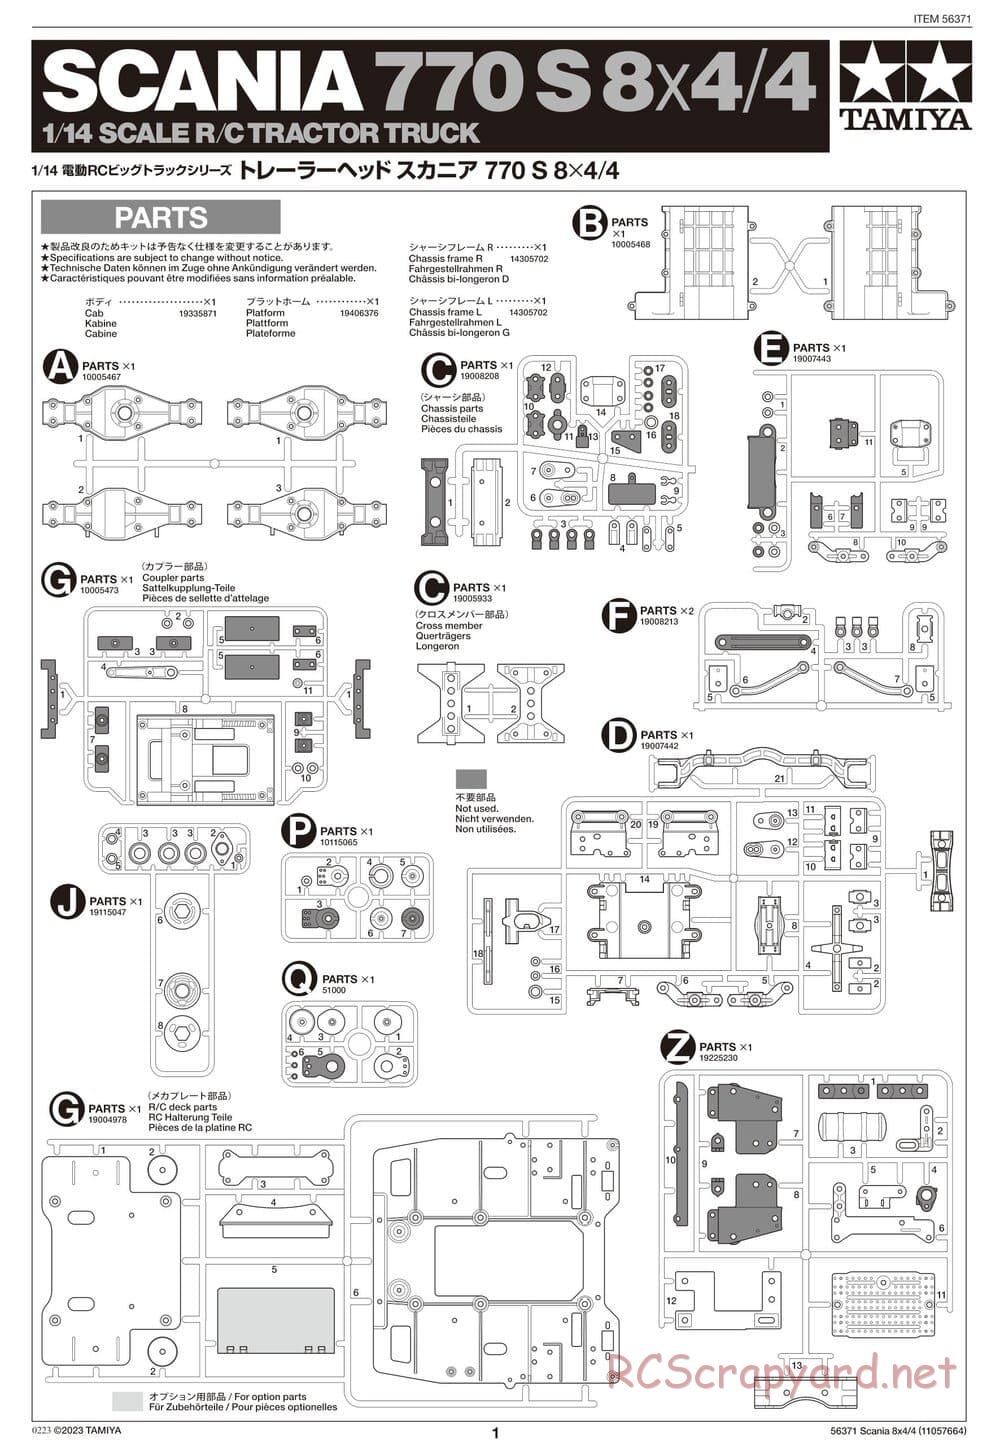 Tamiya - Scania 770 S 8x4/4 Chassis - Parts Manual - Page 1